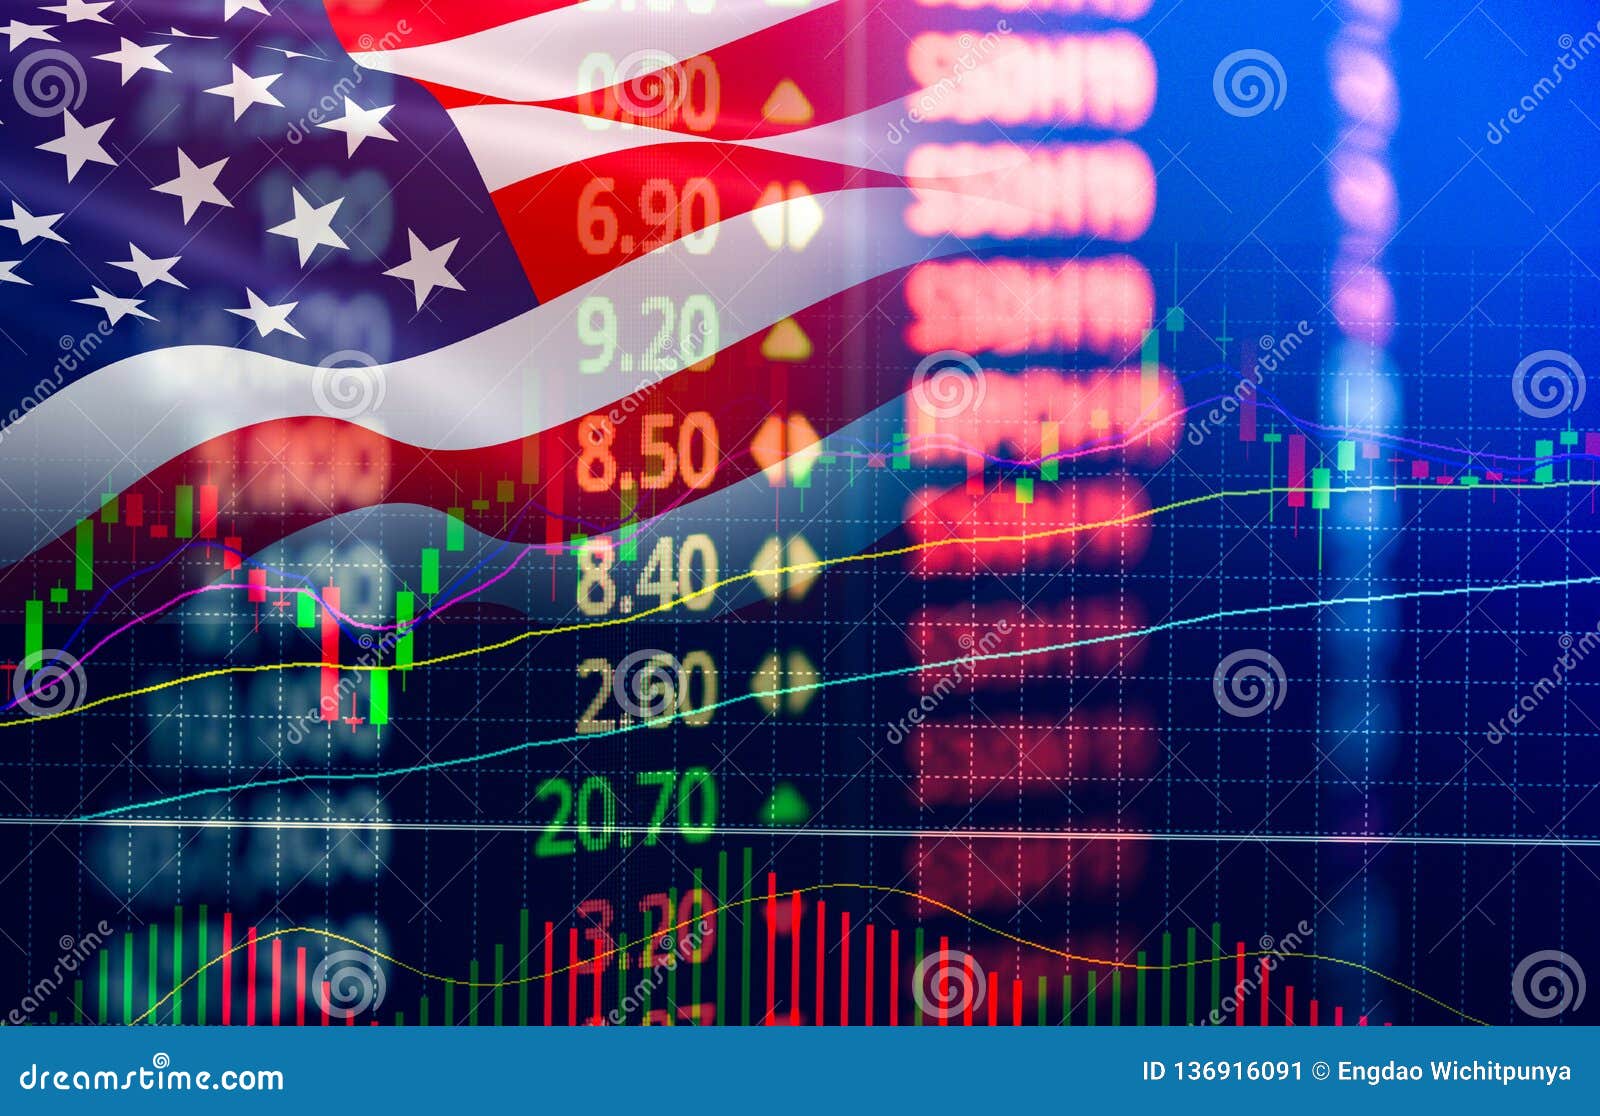 USA. America Stock Market Exchange / New York Stock Market Analysis Forex Indicator Of Changes